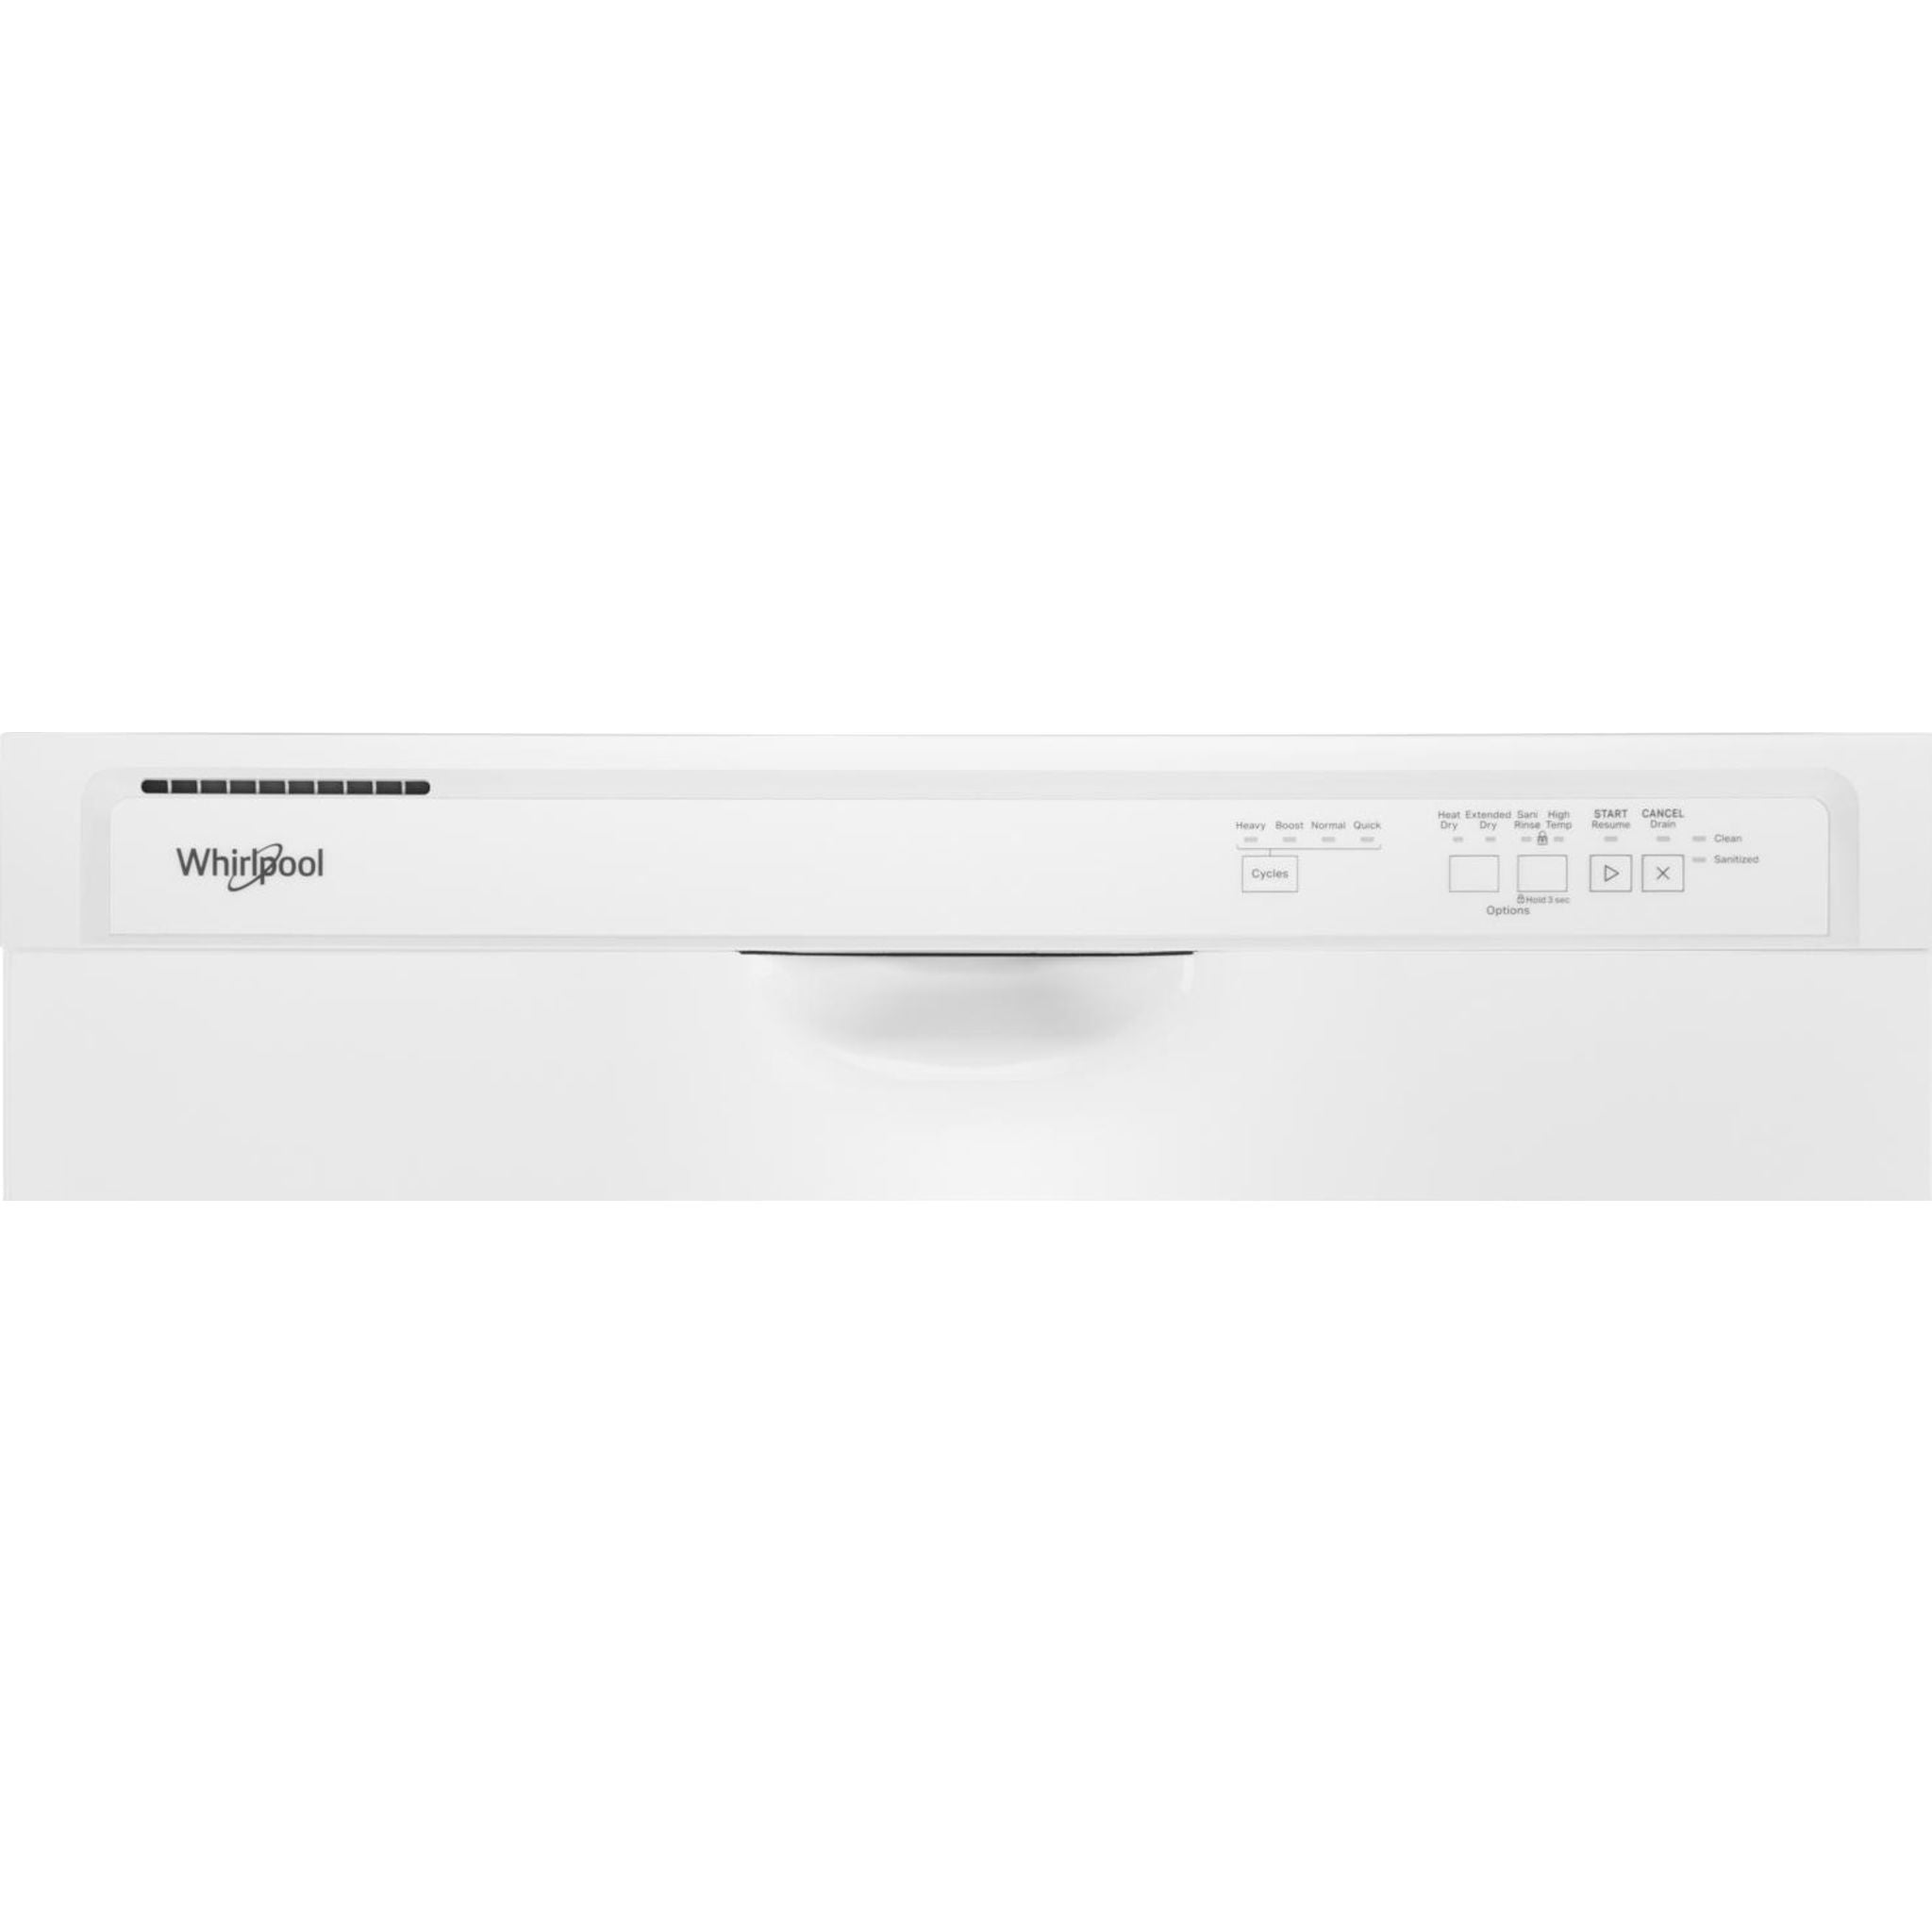 Whirlpool, Dishwasher (WDF341PAPW) - White